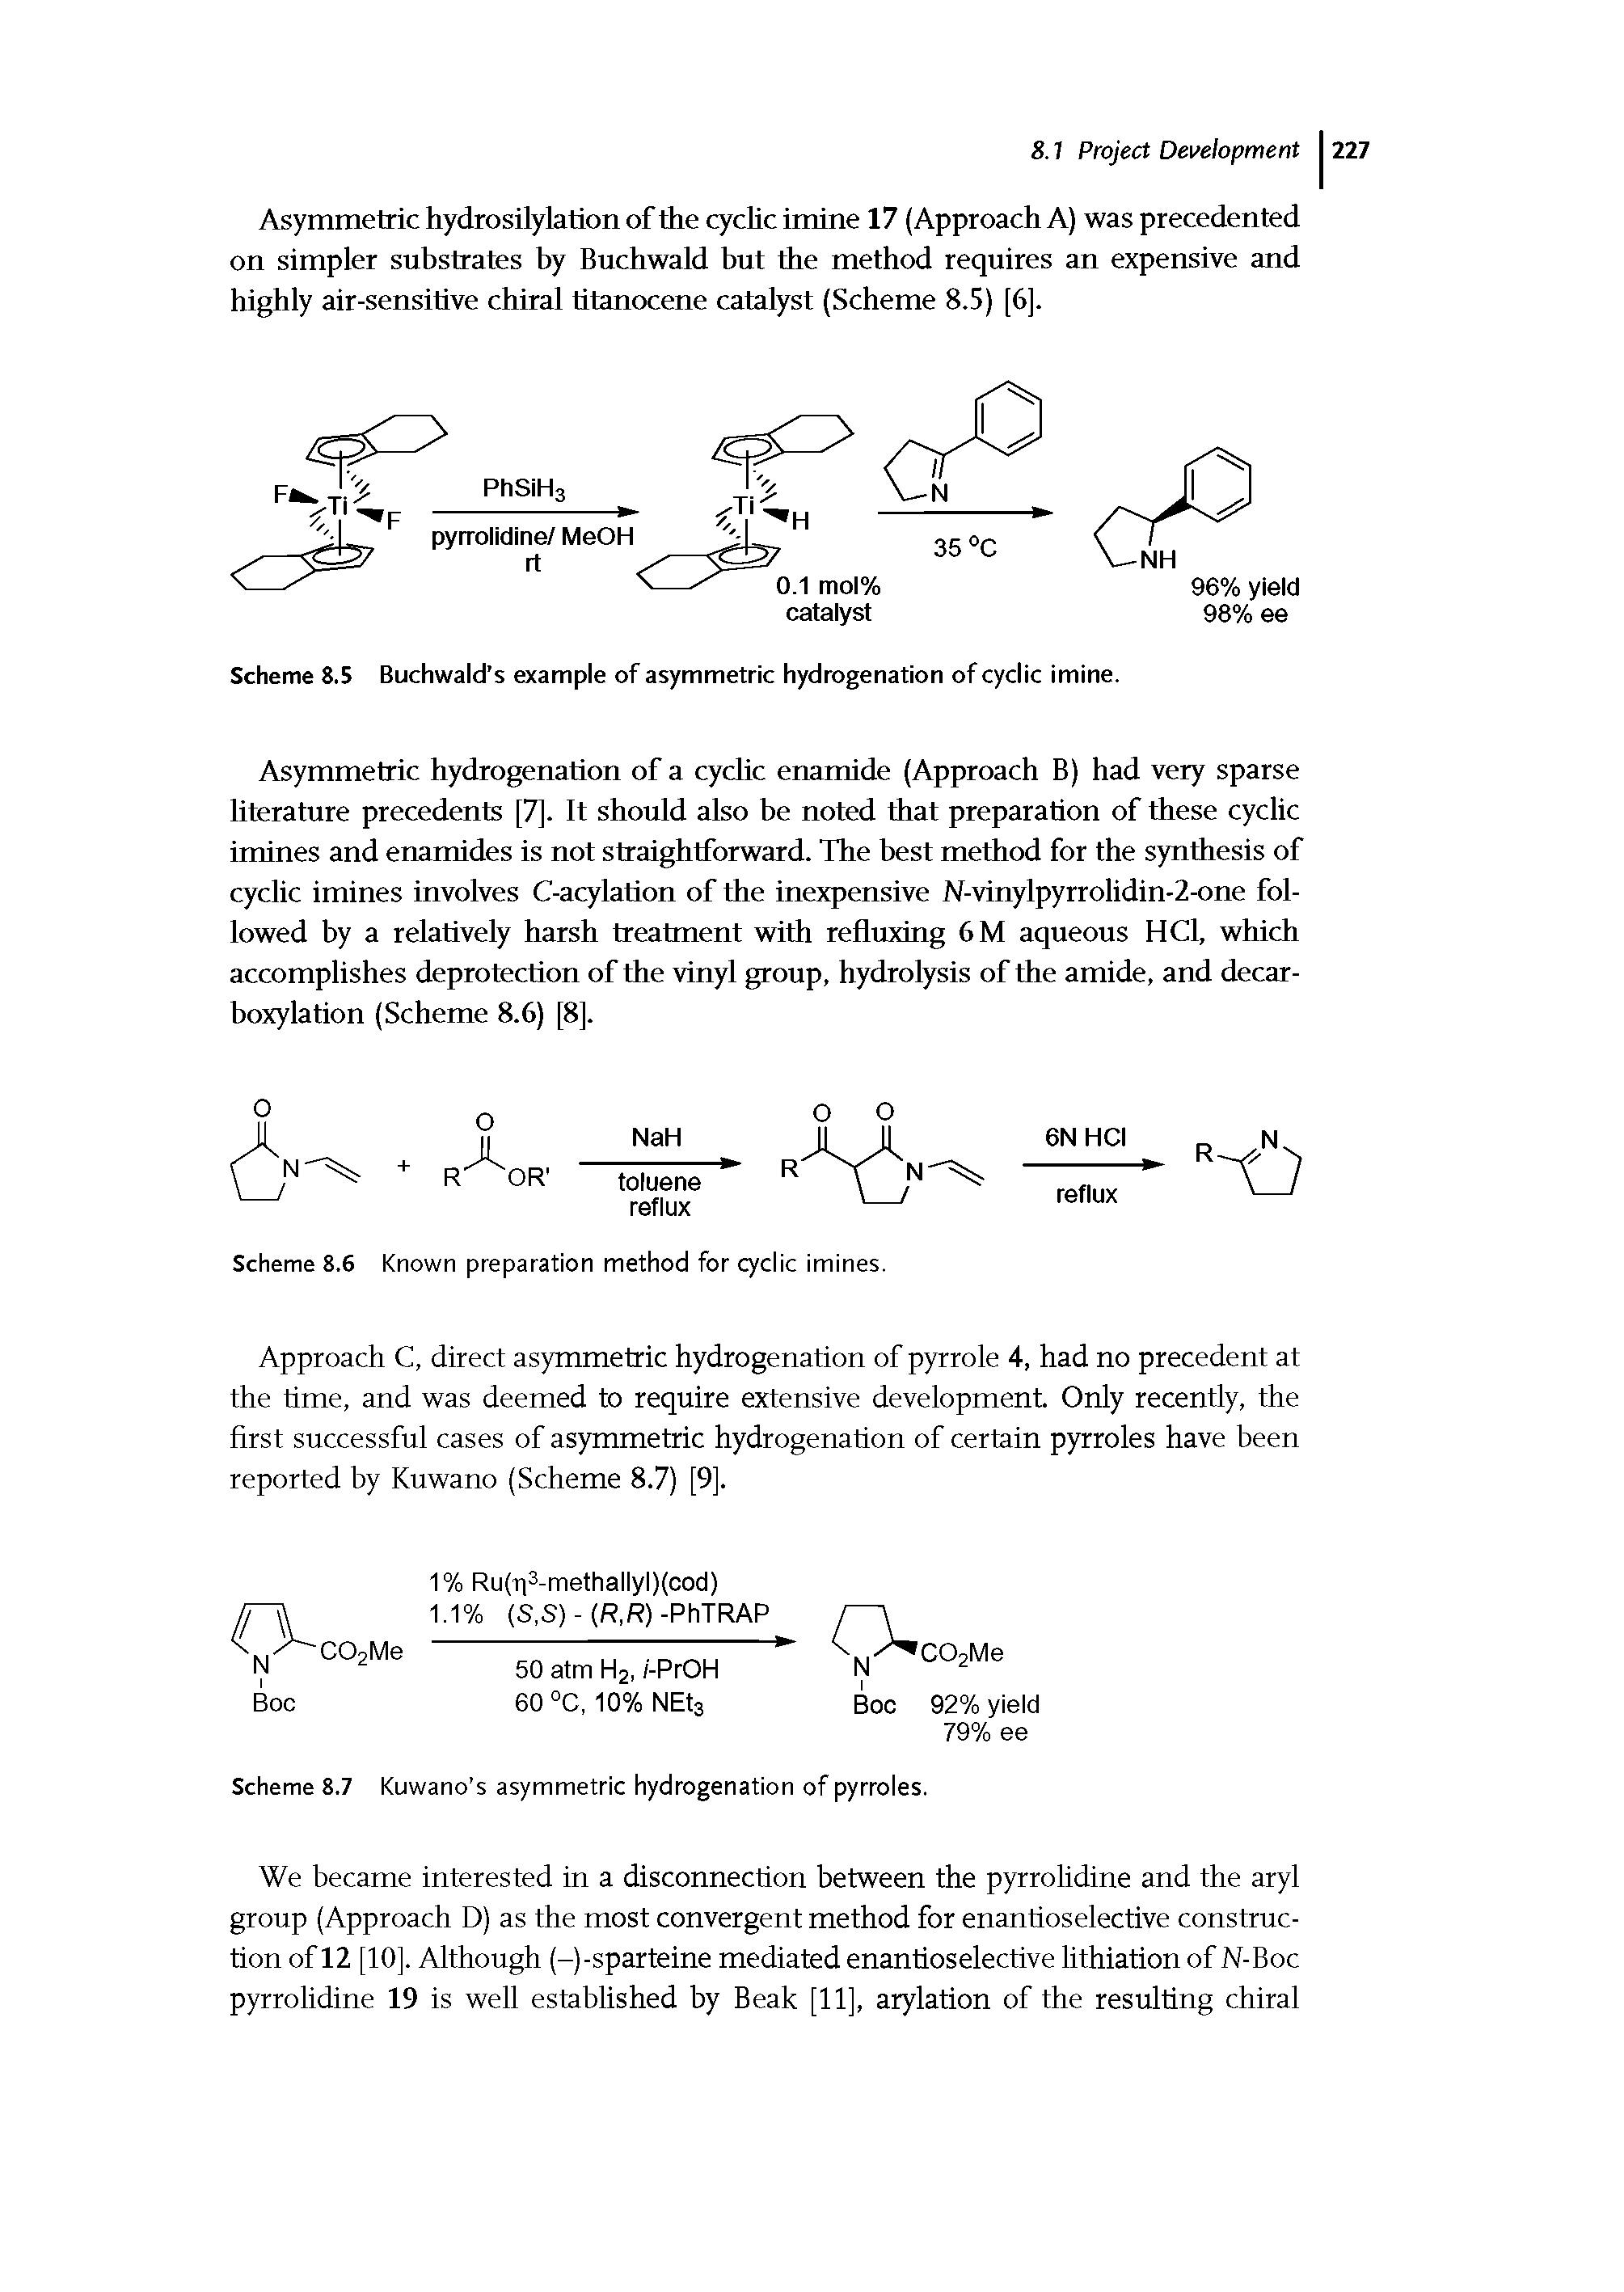 Scheme 8.6 Known preparation method for cyclic imines.